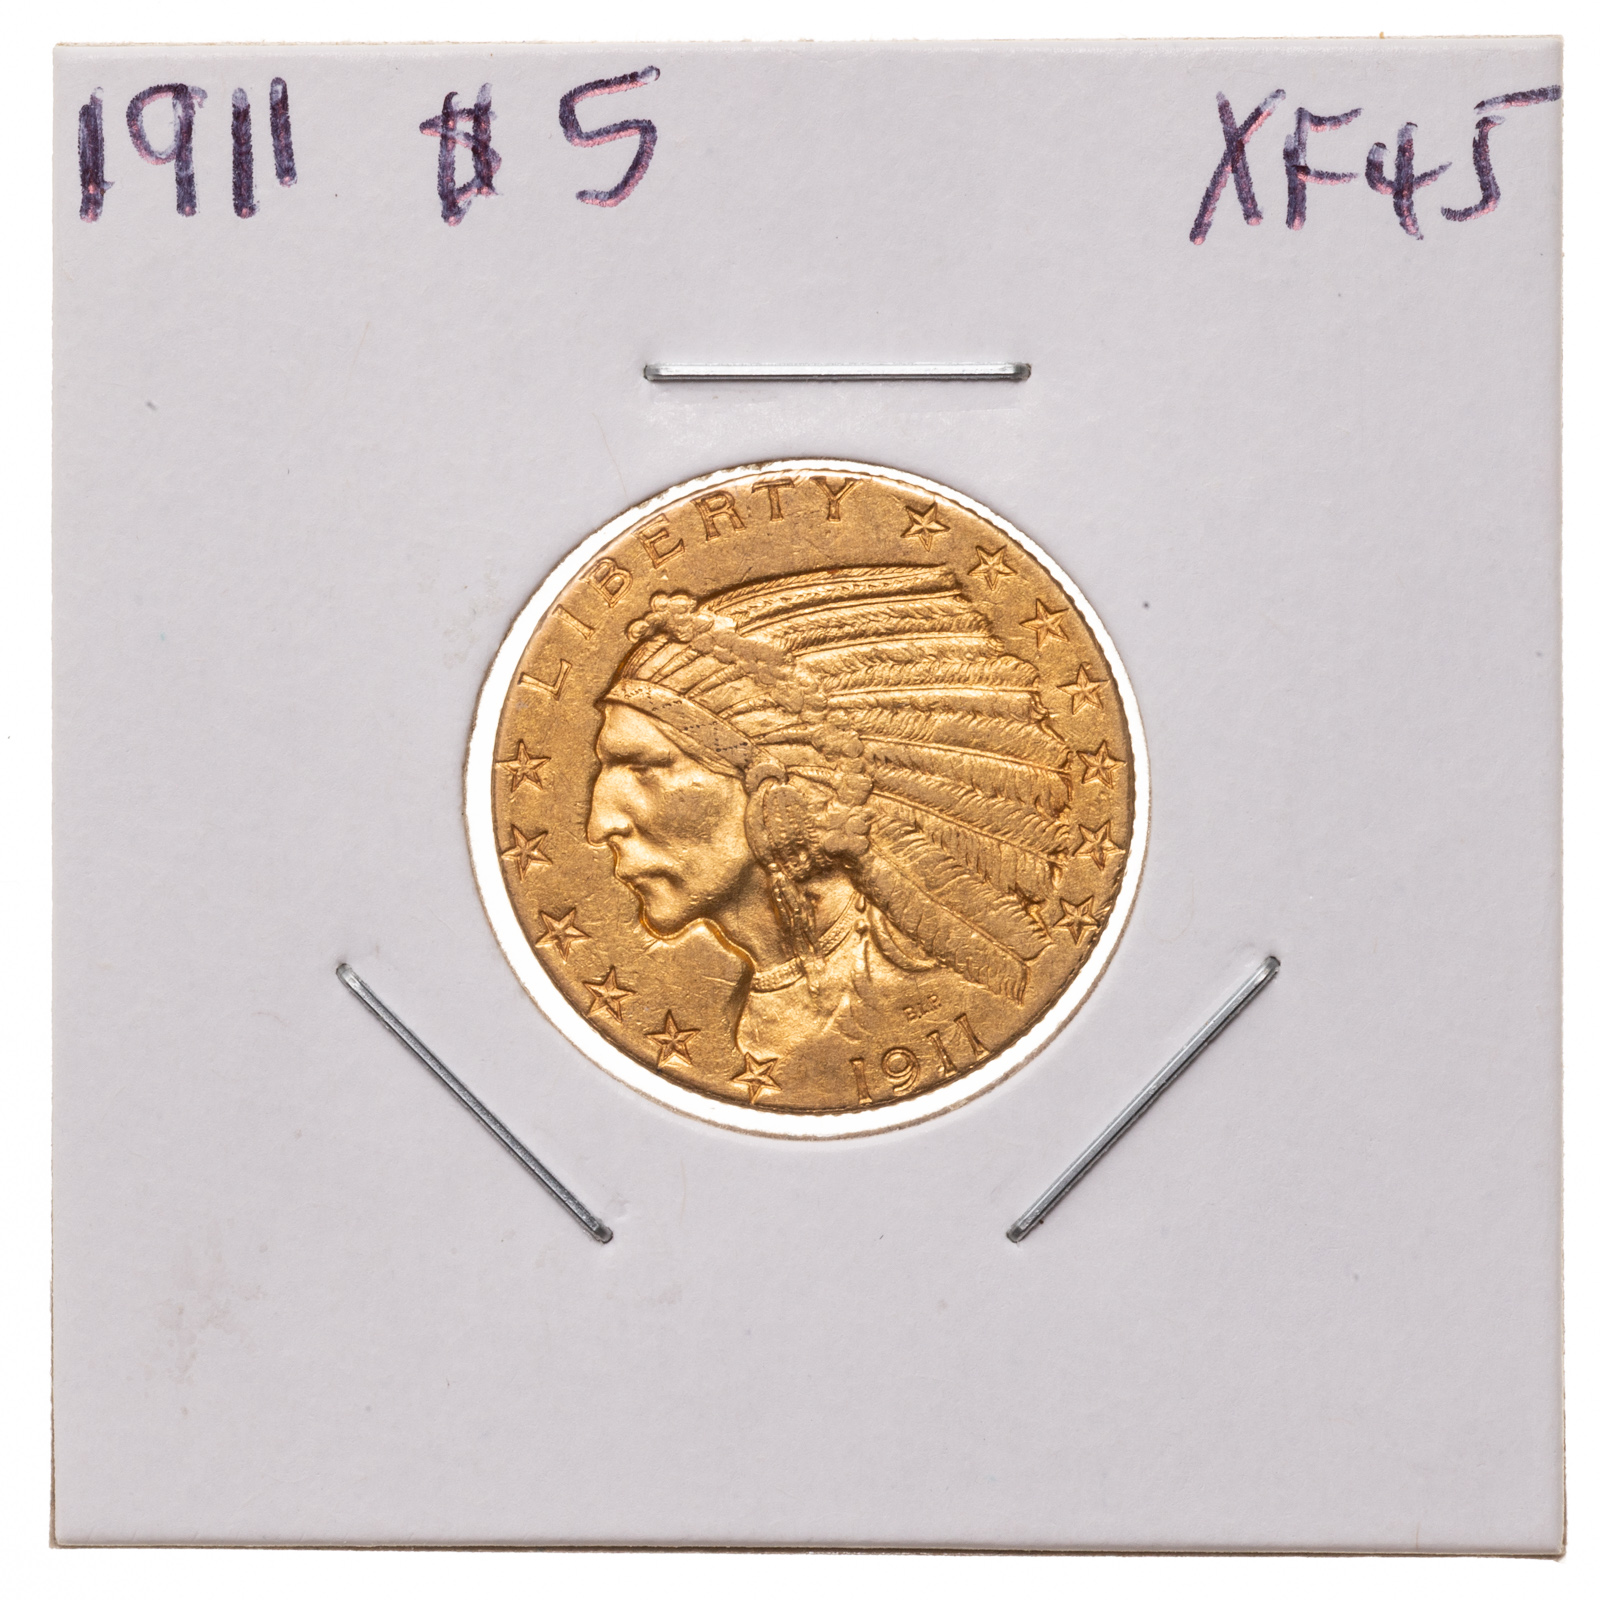 1911 5 GOLD INDIAN HALF EAGLE 3b276b